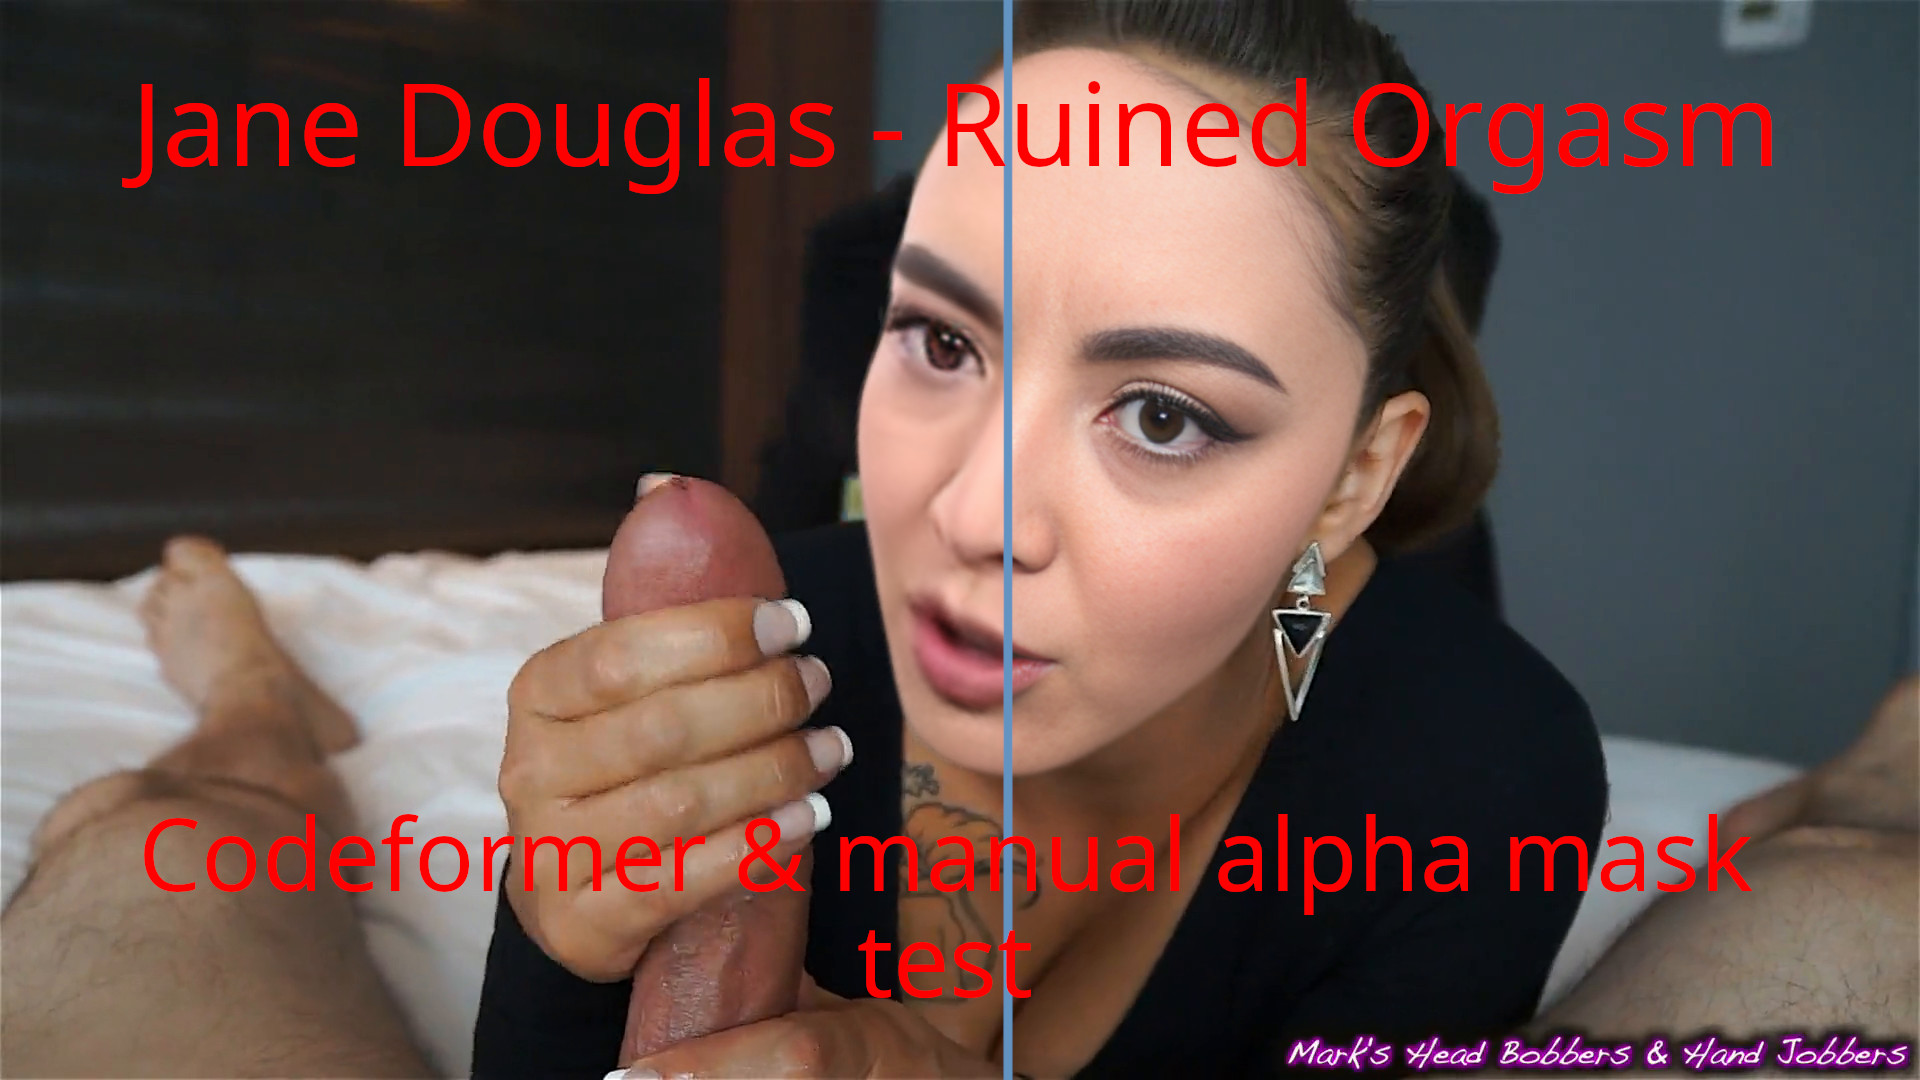 Jane Douglas - Ruined Orgasm - CodeFormer & manual alpha mask test